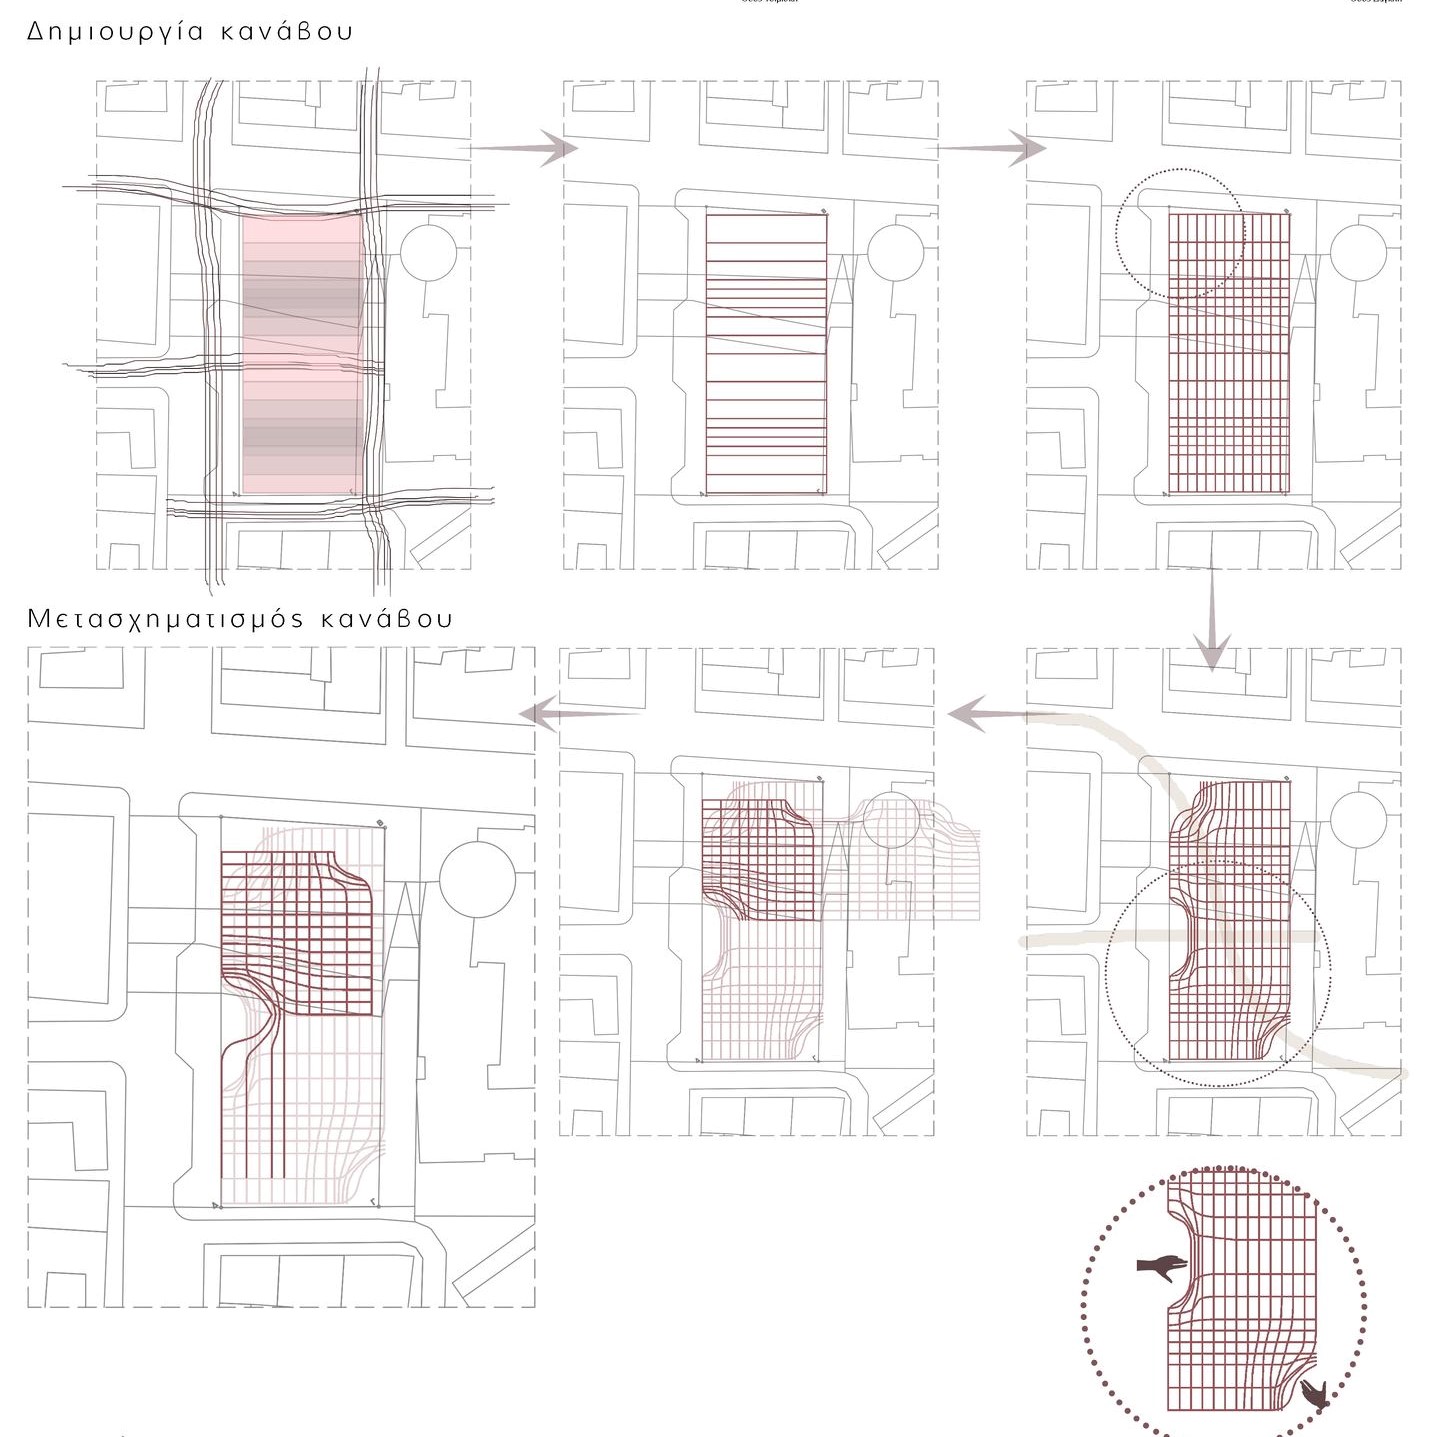 Archisearch “Project 10”, εργασία των Φένια Κουτσουρά, Δήμητρα Μπόντζιου και Σταυρούλα Τζιούρτζια, στα πλαίσια του μαθήματος “08ΕΒ10-Σχεδιασμός 8” του Τμήματος Αρχιτεκτόνων τoυ ΑΠΘ